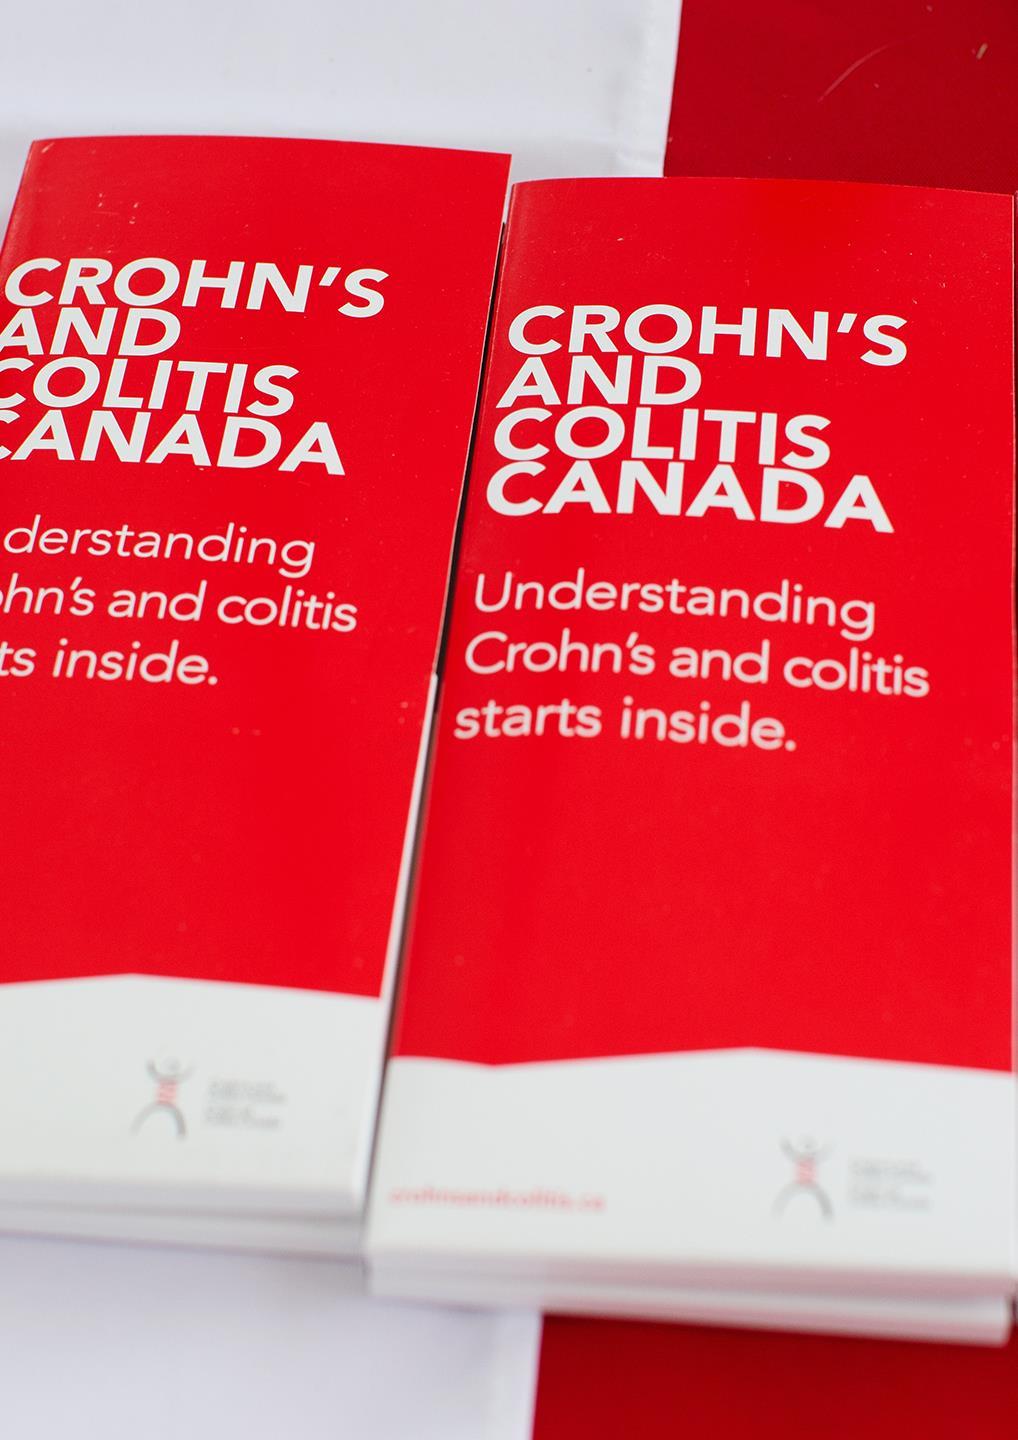 6 Resources Website: gutsywalk.ca Crohn s and Colitis Canada representative: email gutsywalk@crohnsandcolitis.